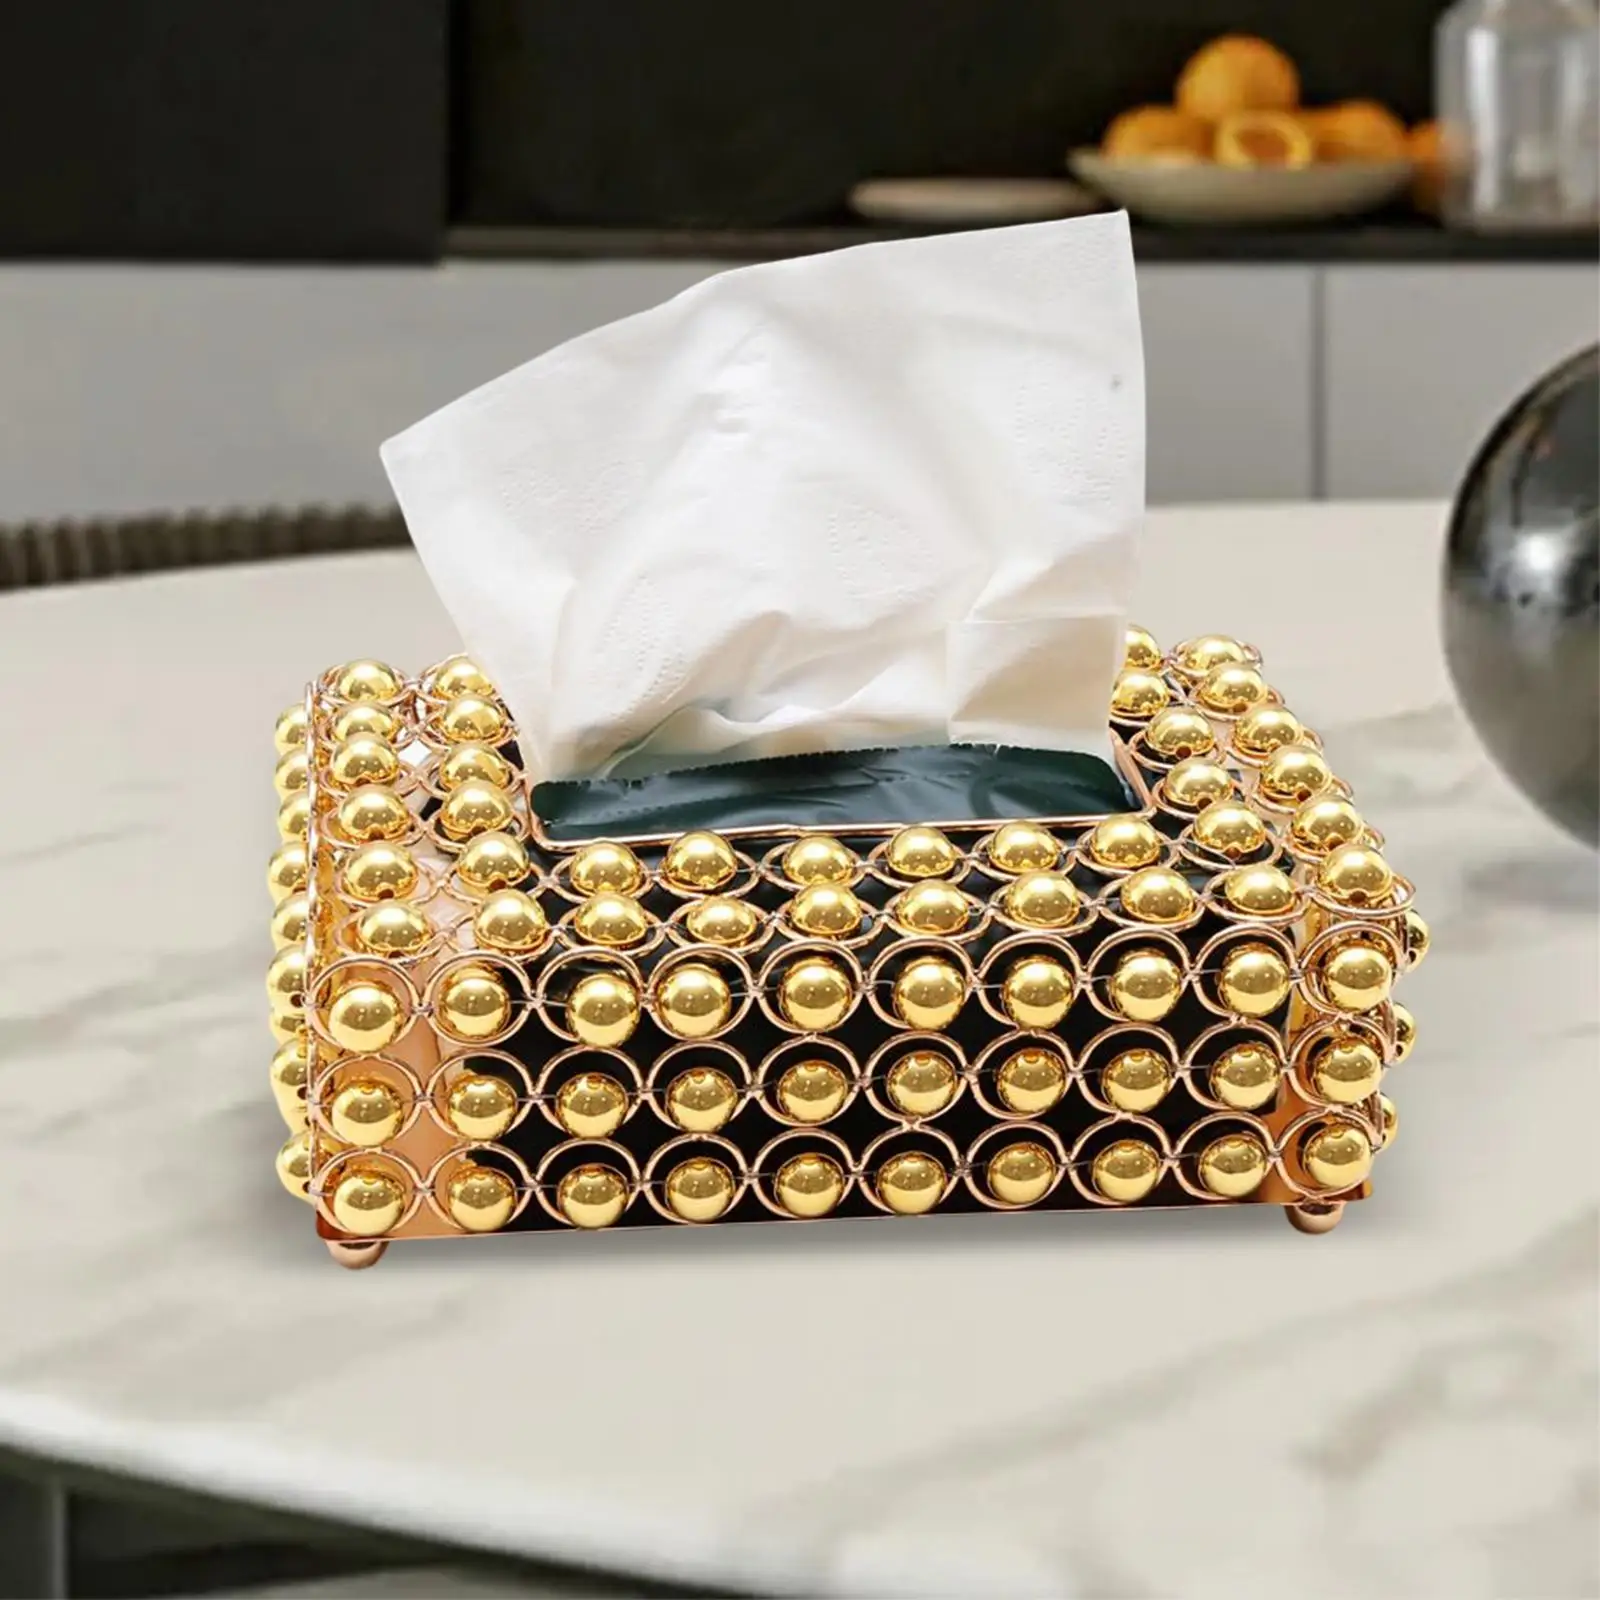 Golden Metal Simulation Pearl Facial Tissue Case for Desk Table Wedding Table Centerpiece Rectangular Toliet Paper Box Elegant